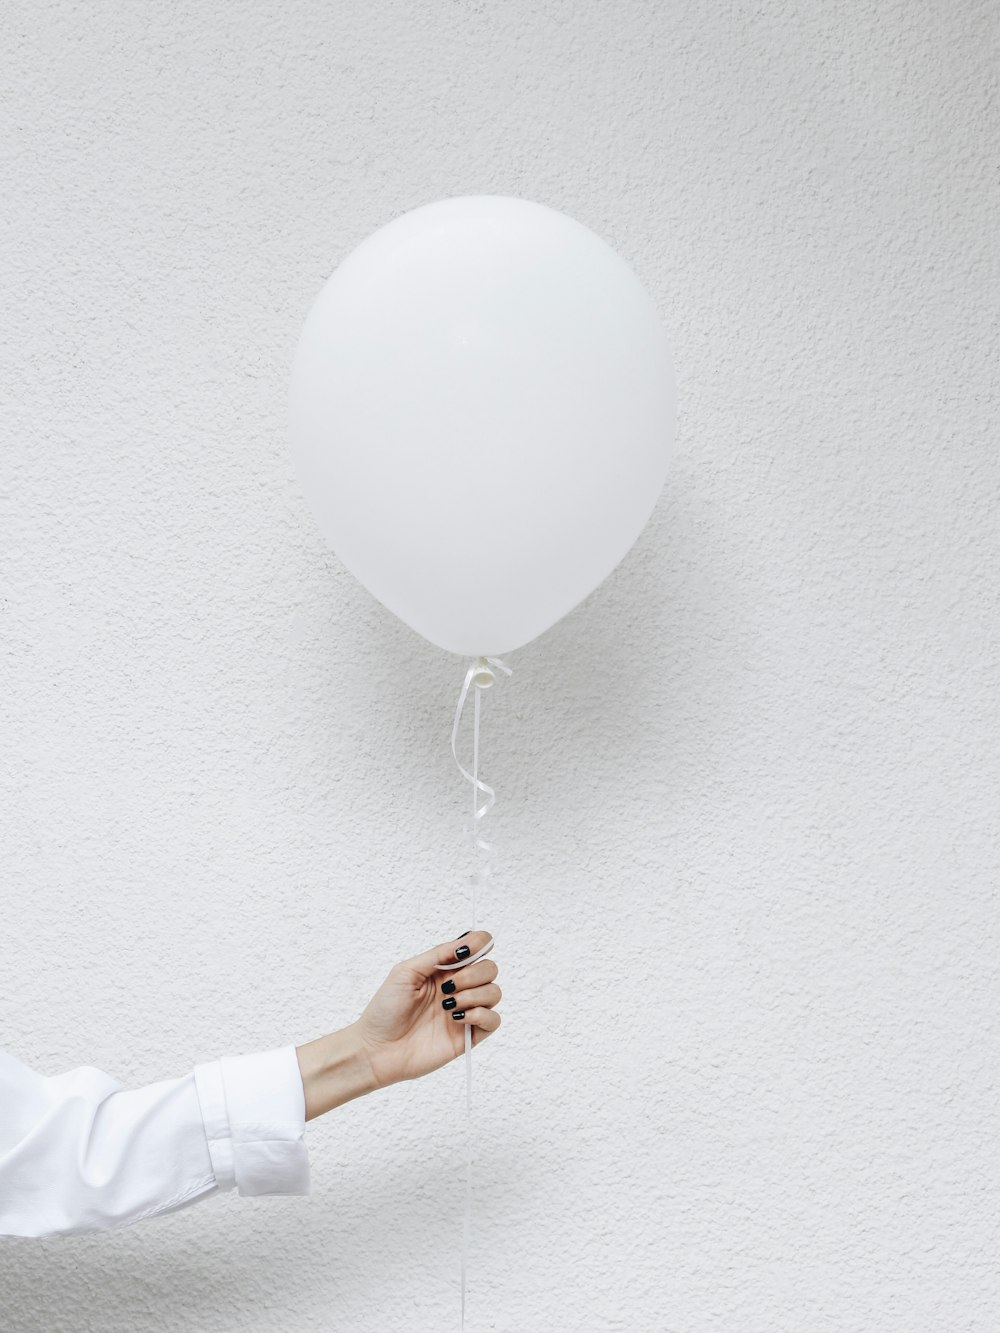 person holding white balloons near white wall